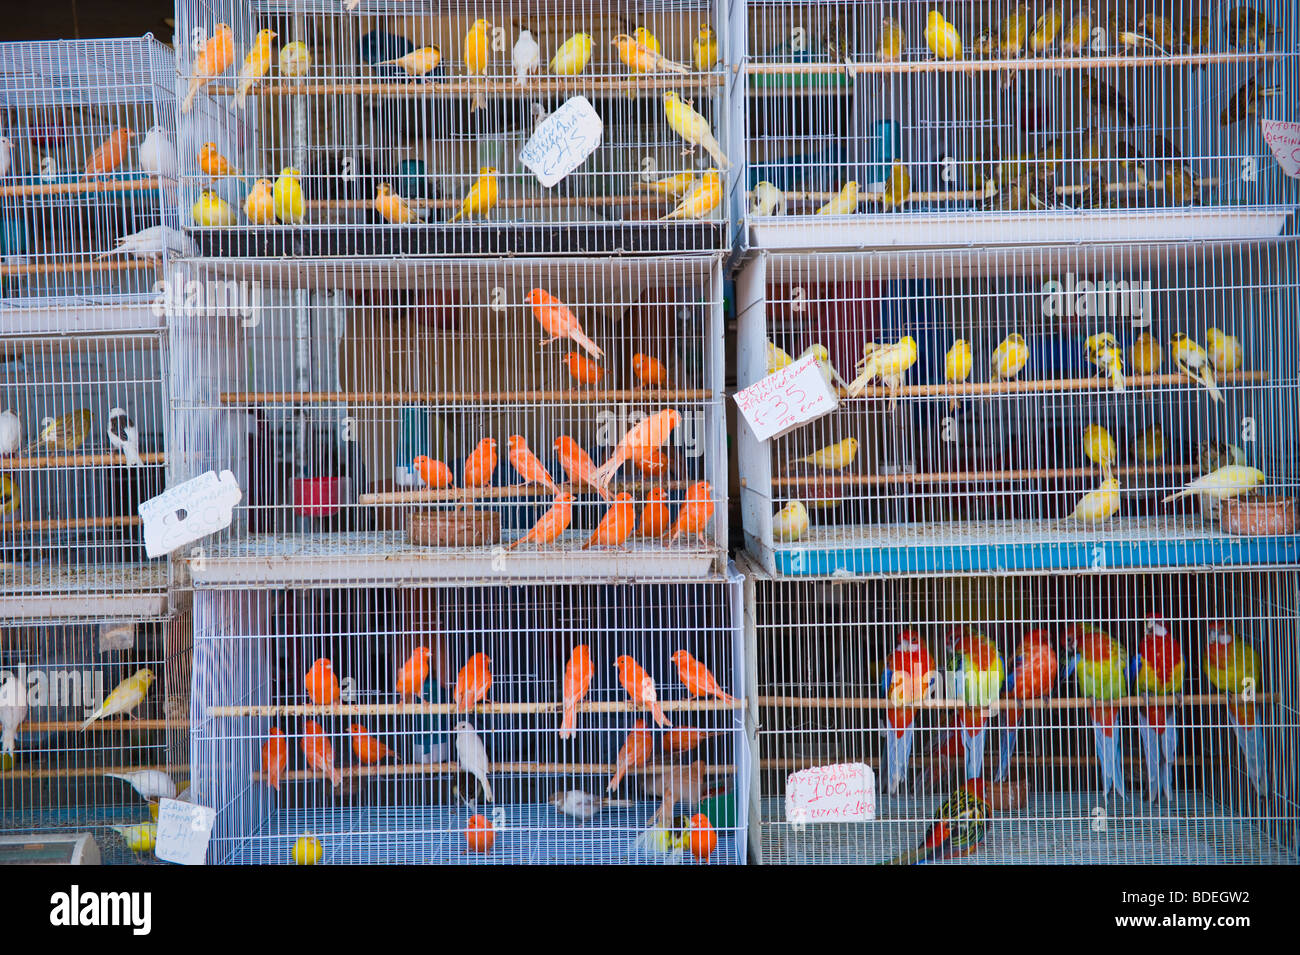 Venta de aves fotografías e imágenes de alta resolución - Alamy